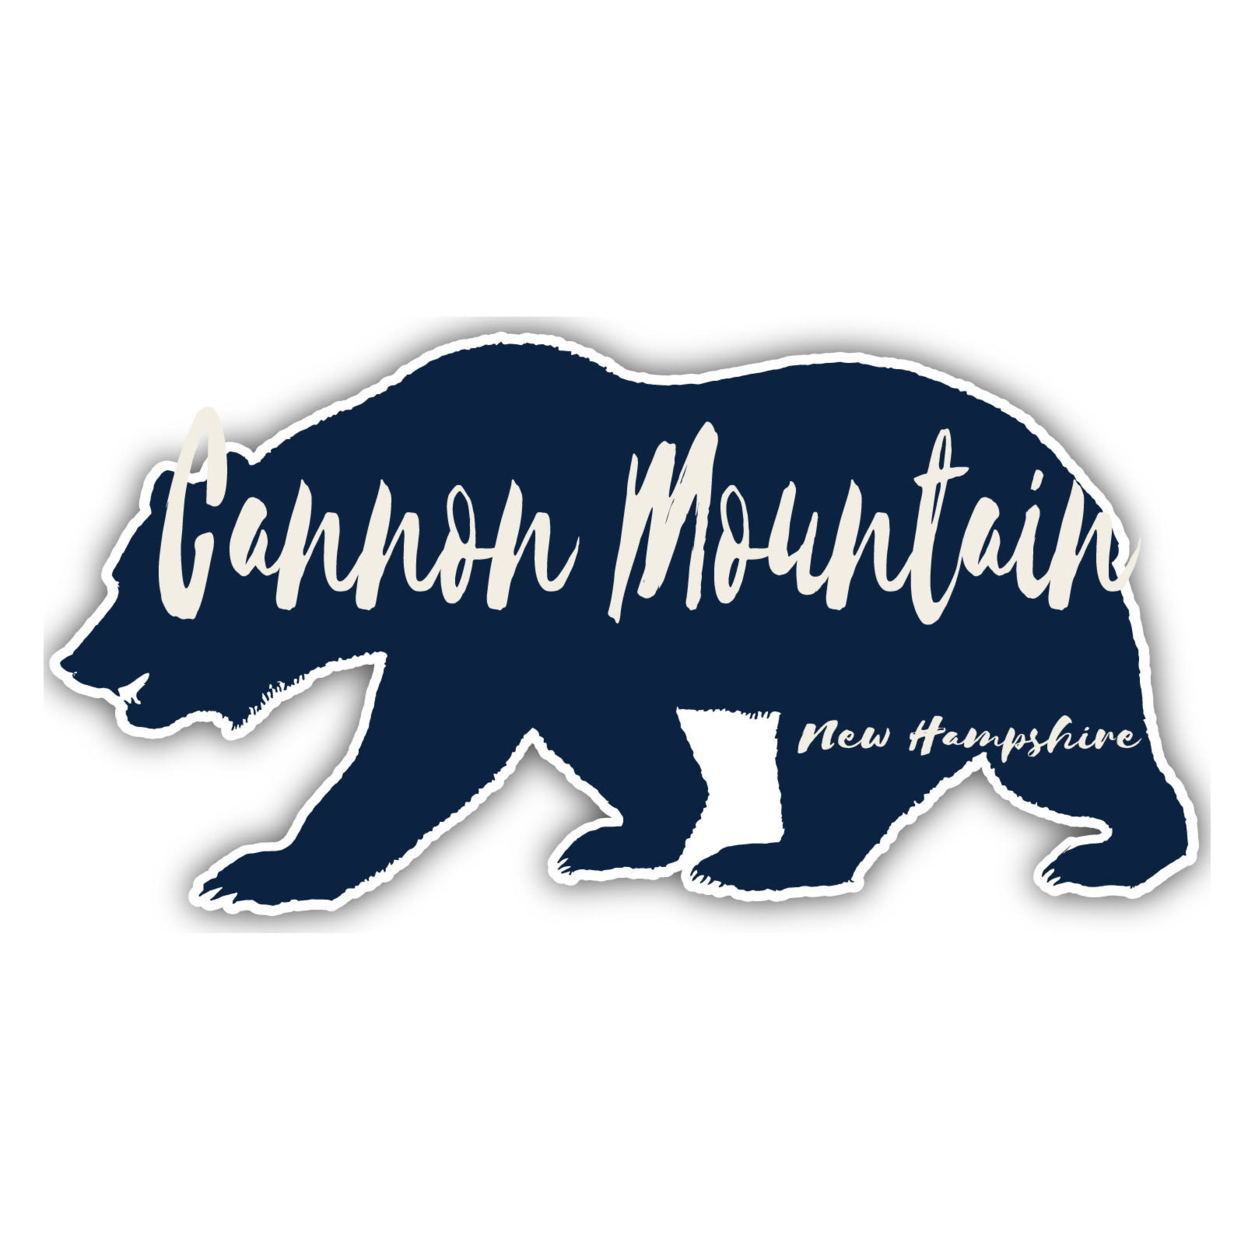 Cannon Mountain New Hampshire Souvenir Decorative Stickers (Choose Theme And Size) - Single Unit, 6-Inch, Bear